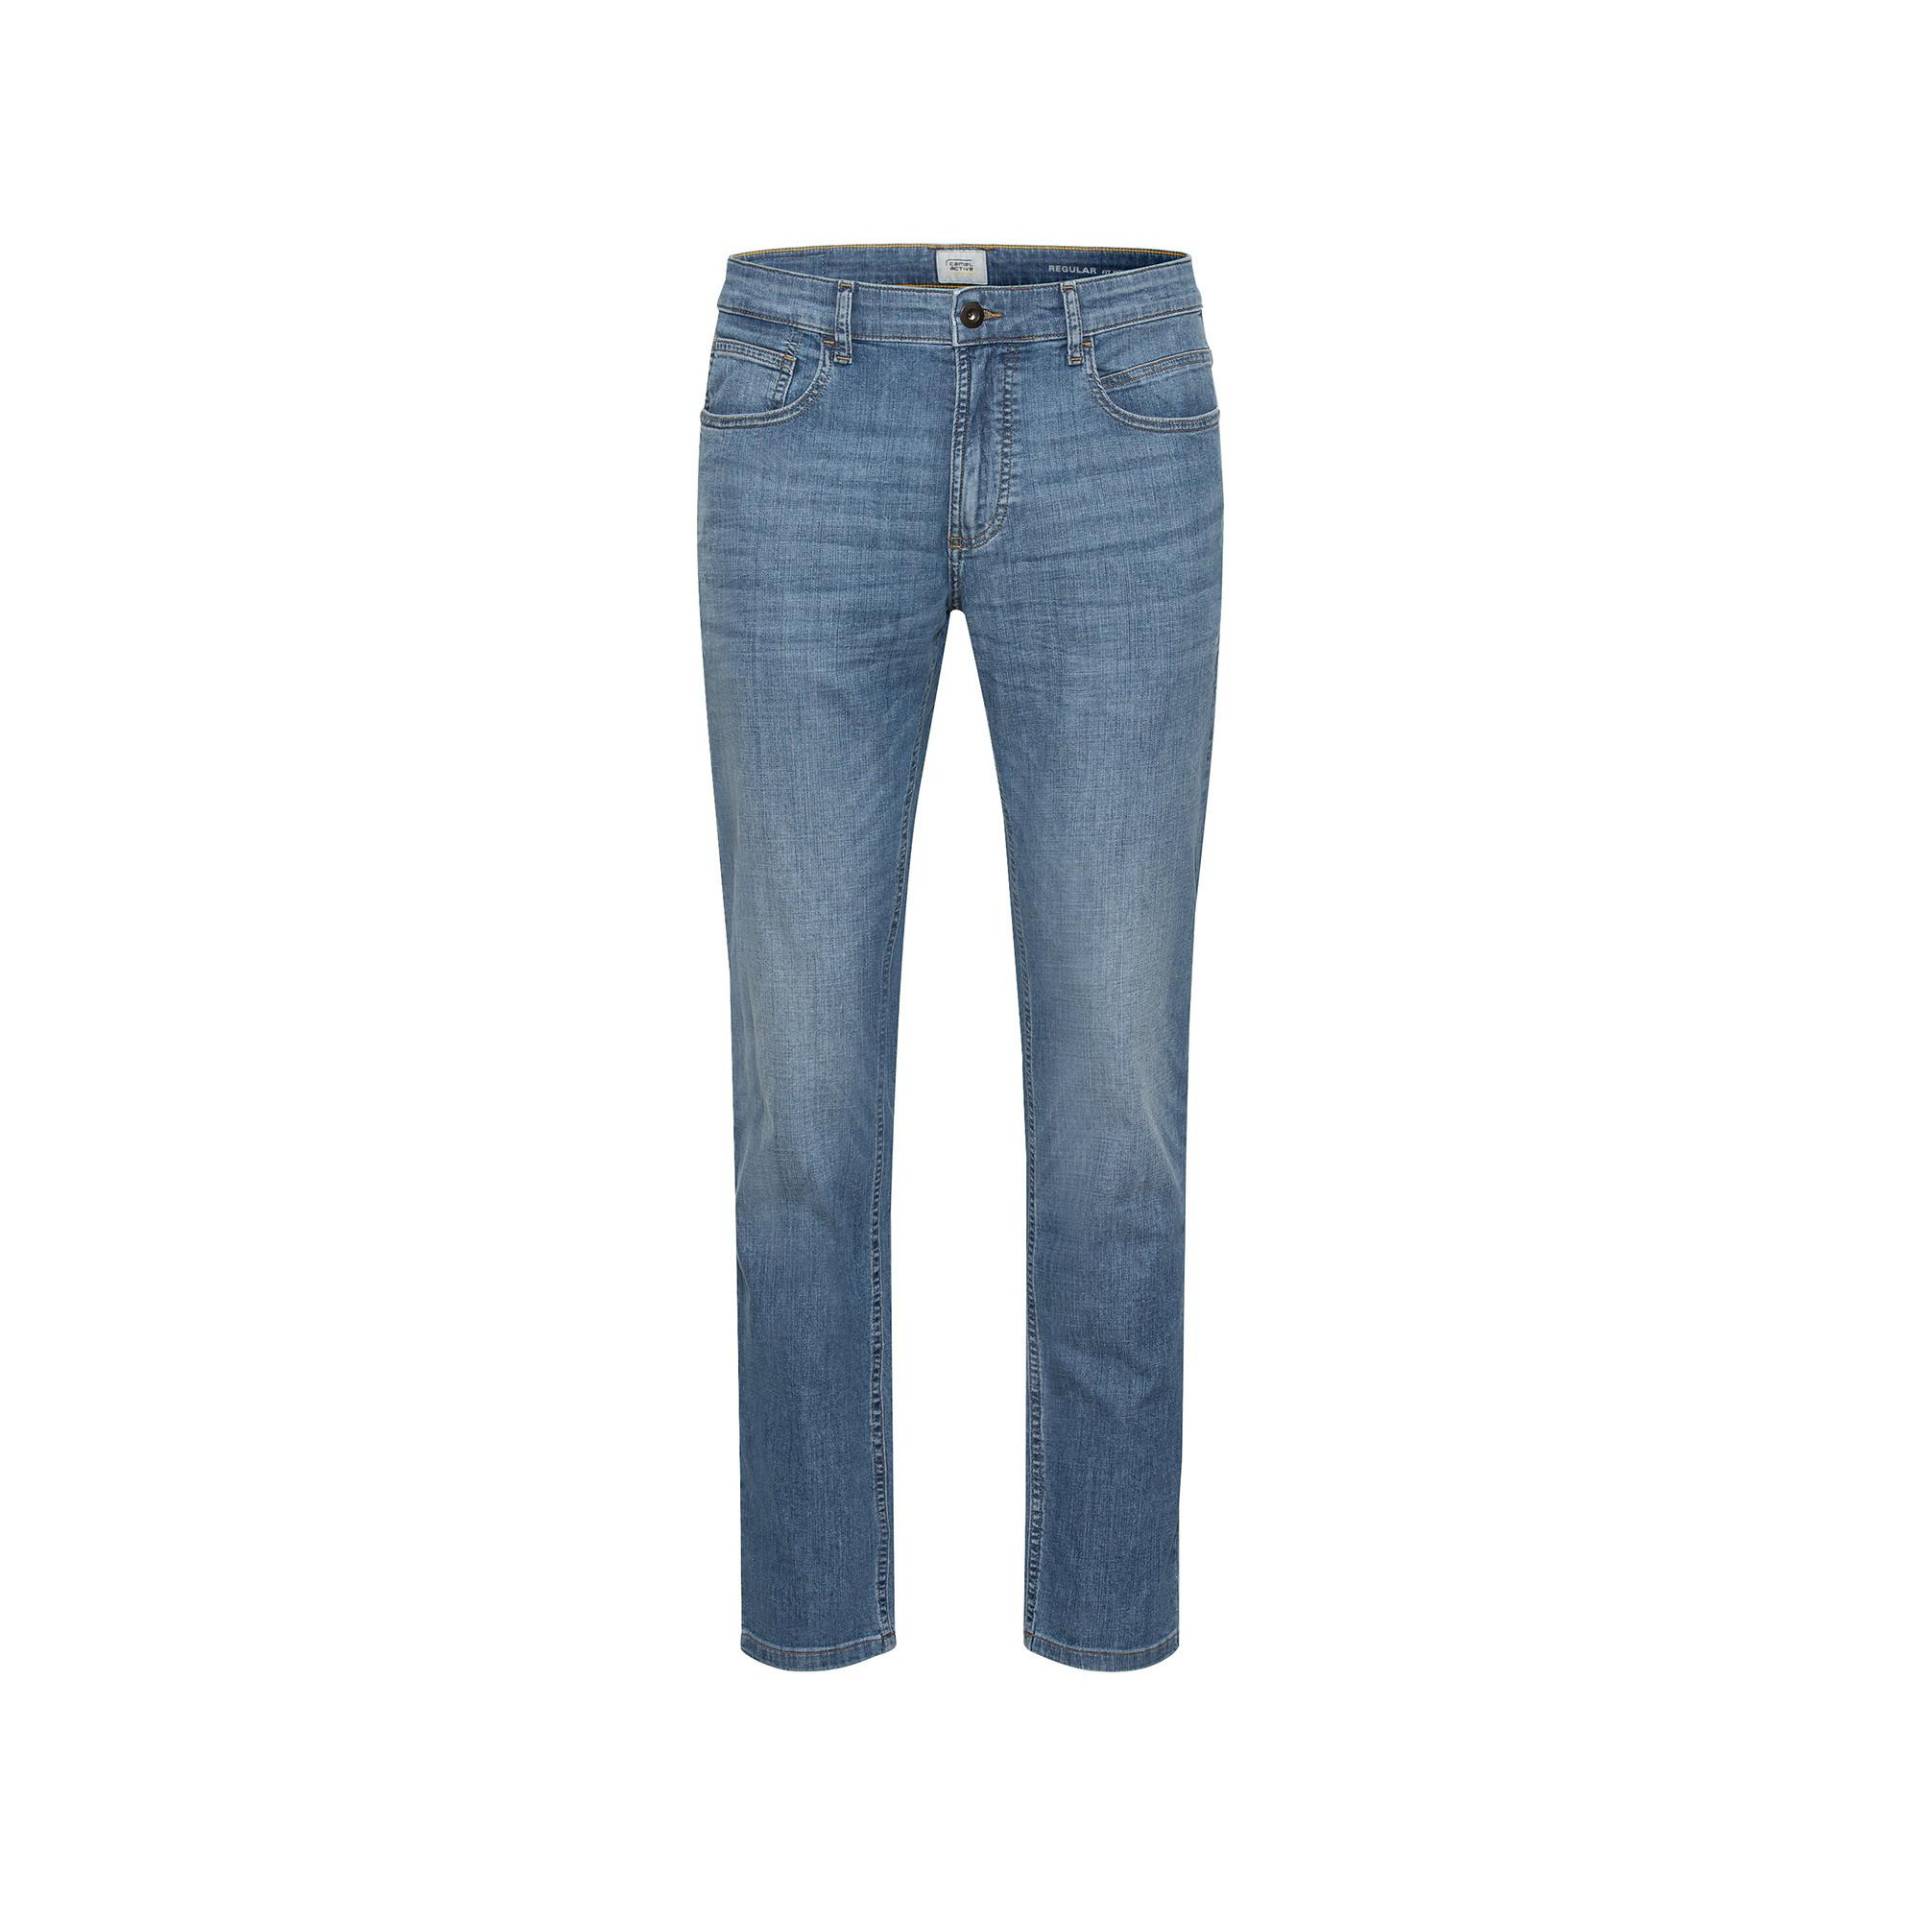 Jeans Herren Blau L30/W36